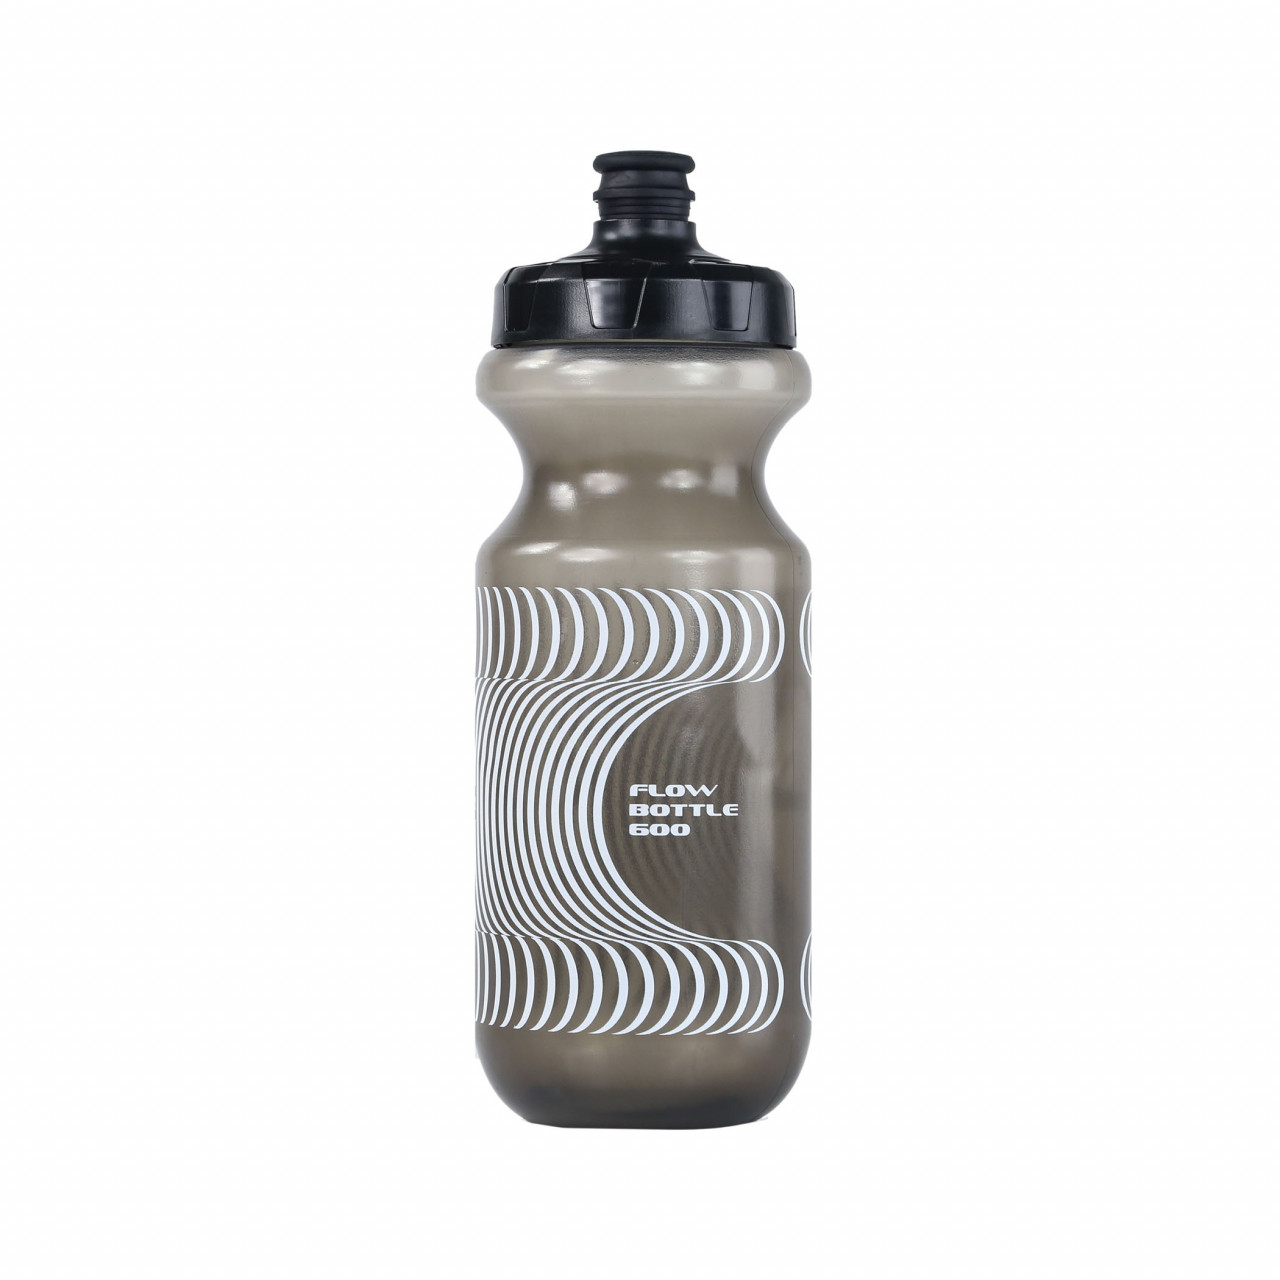 Lezyne cycling bottle Flow Bottle white 600 ml, smoke gray - Products ...